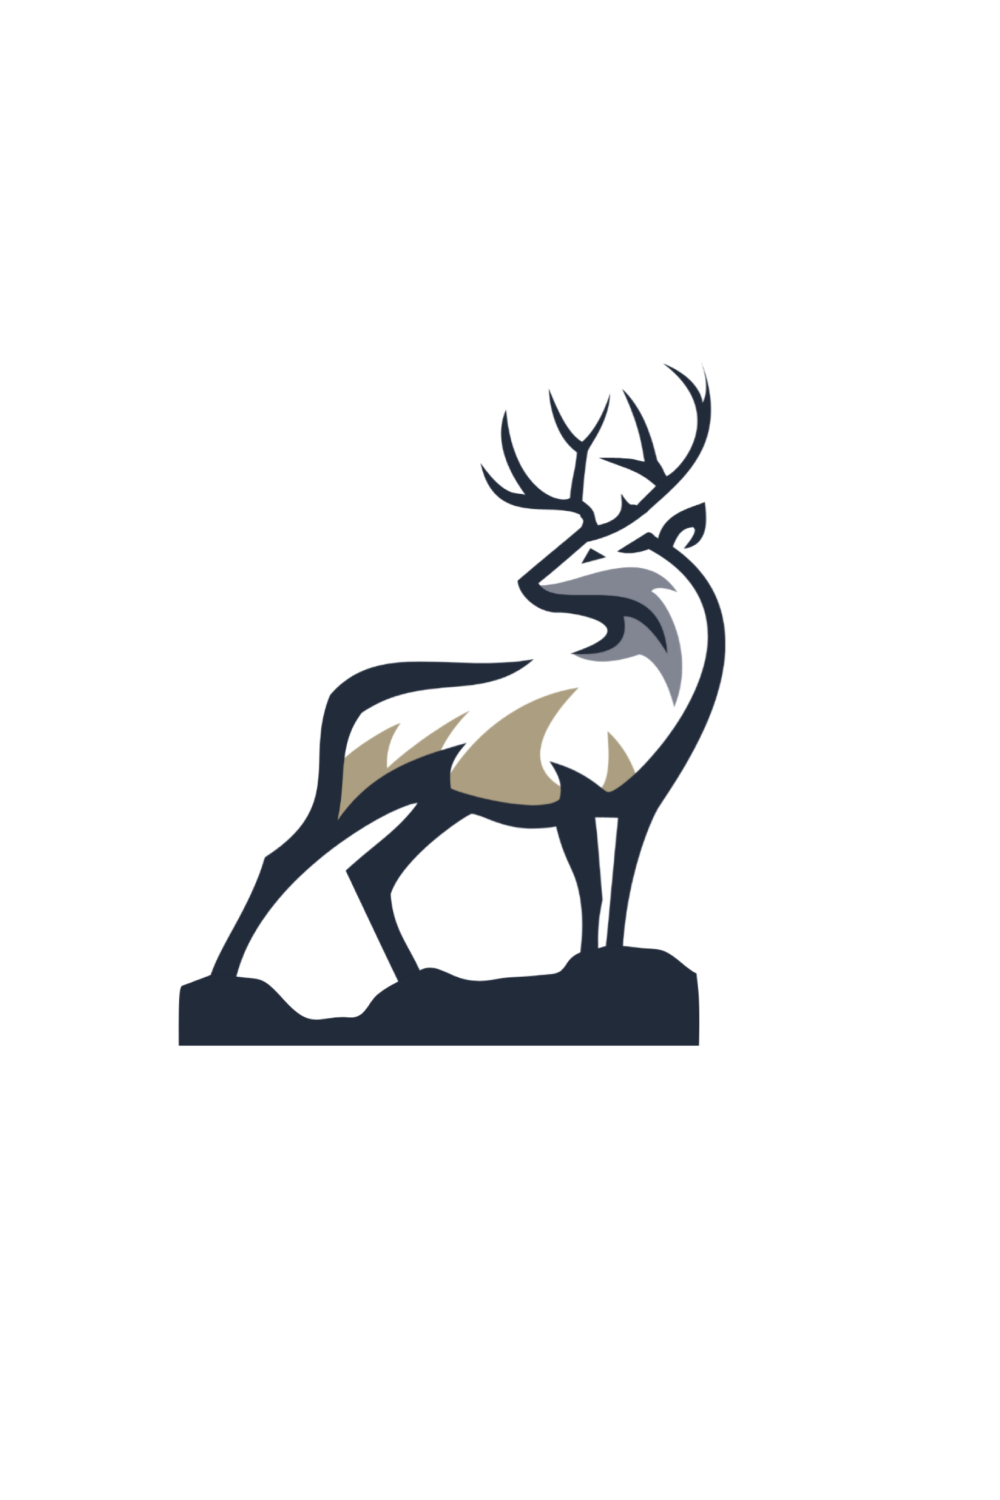 Minimal Deer Logo Design pinterest image.